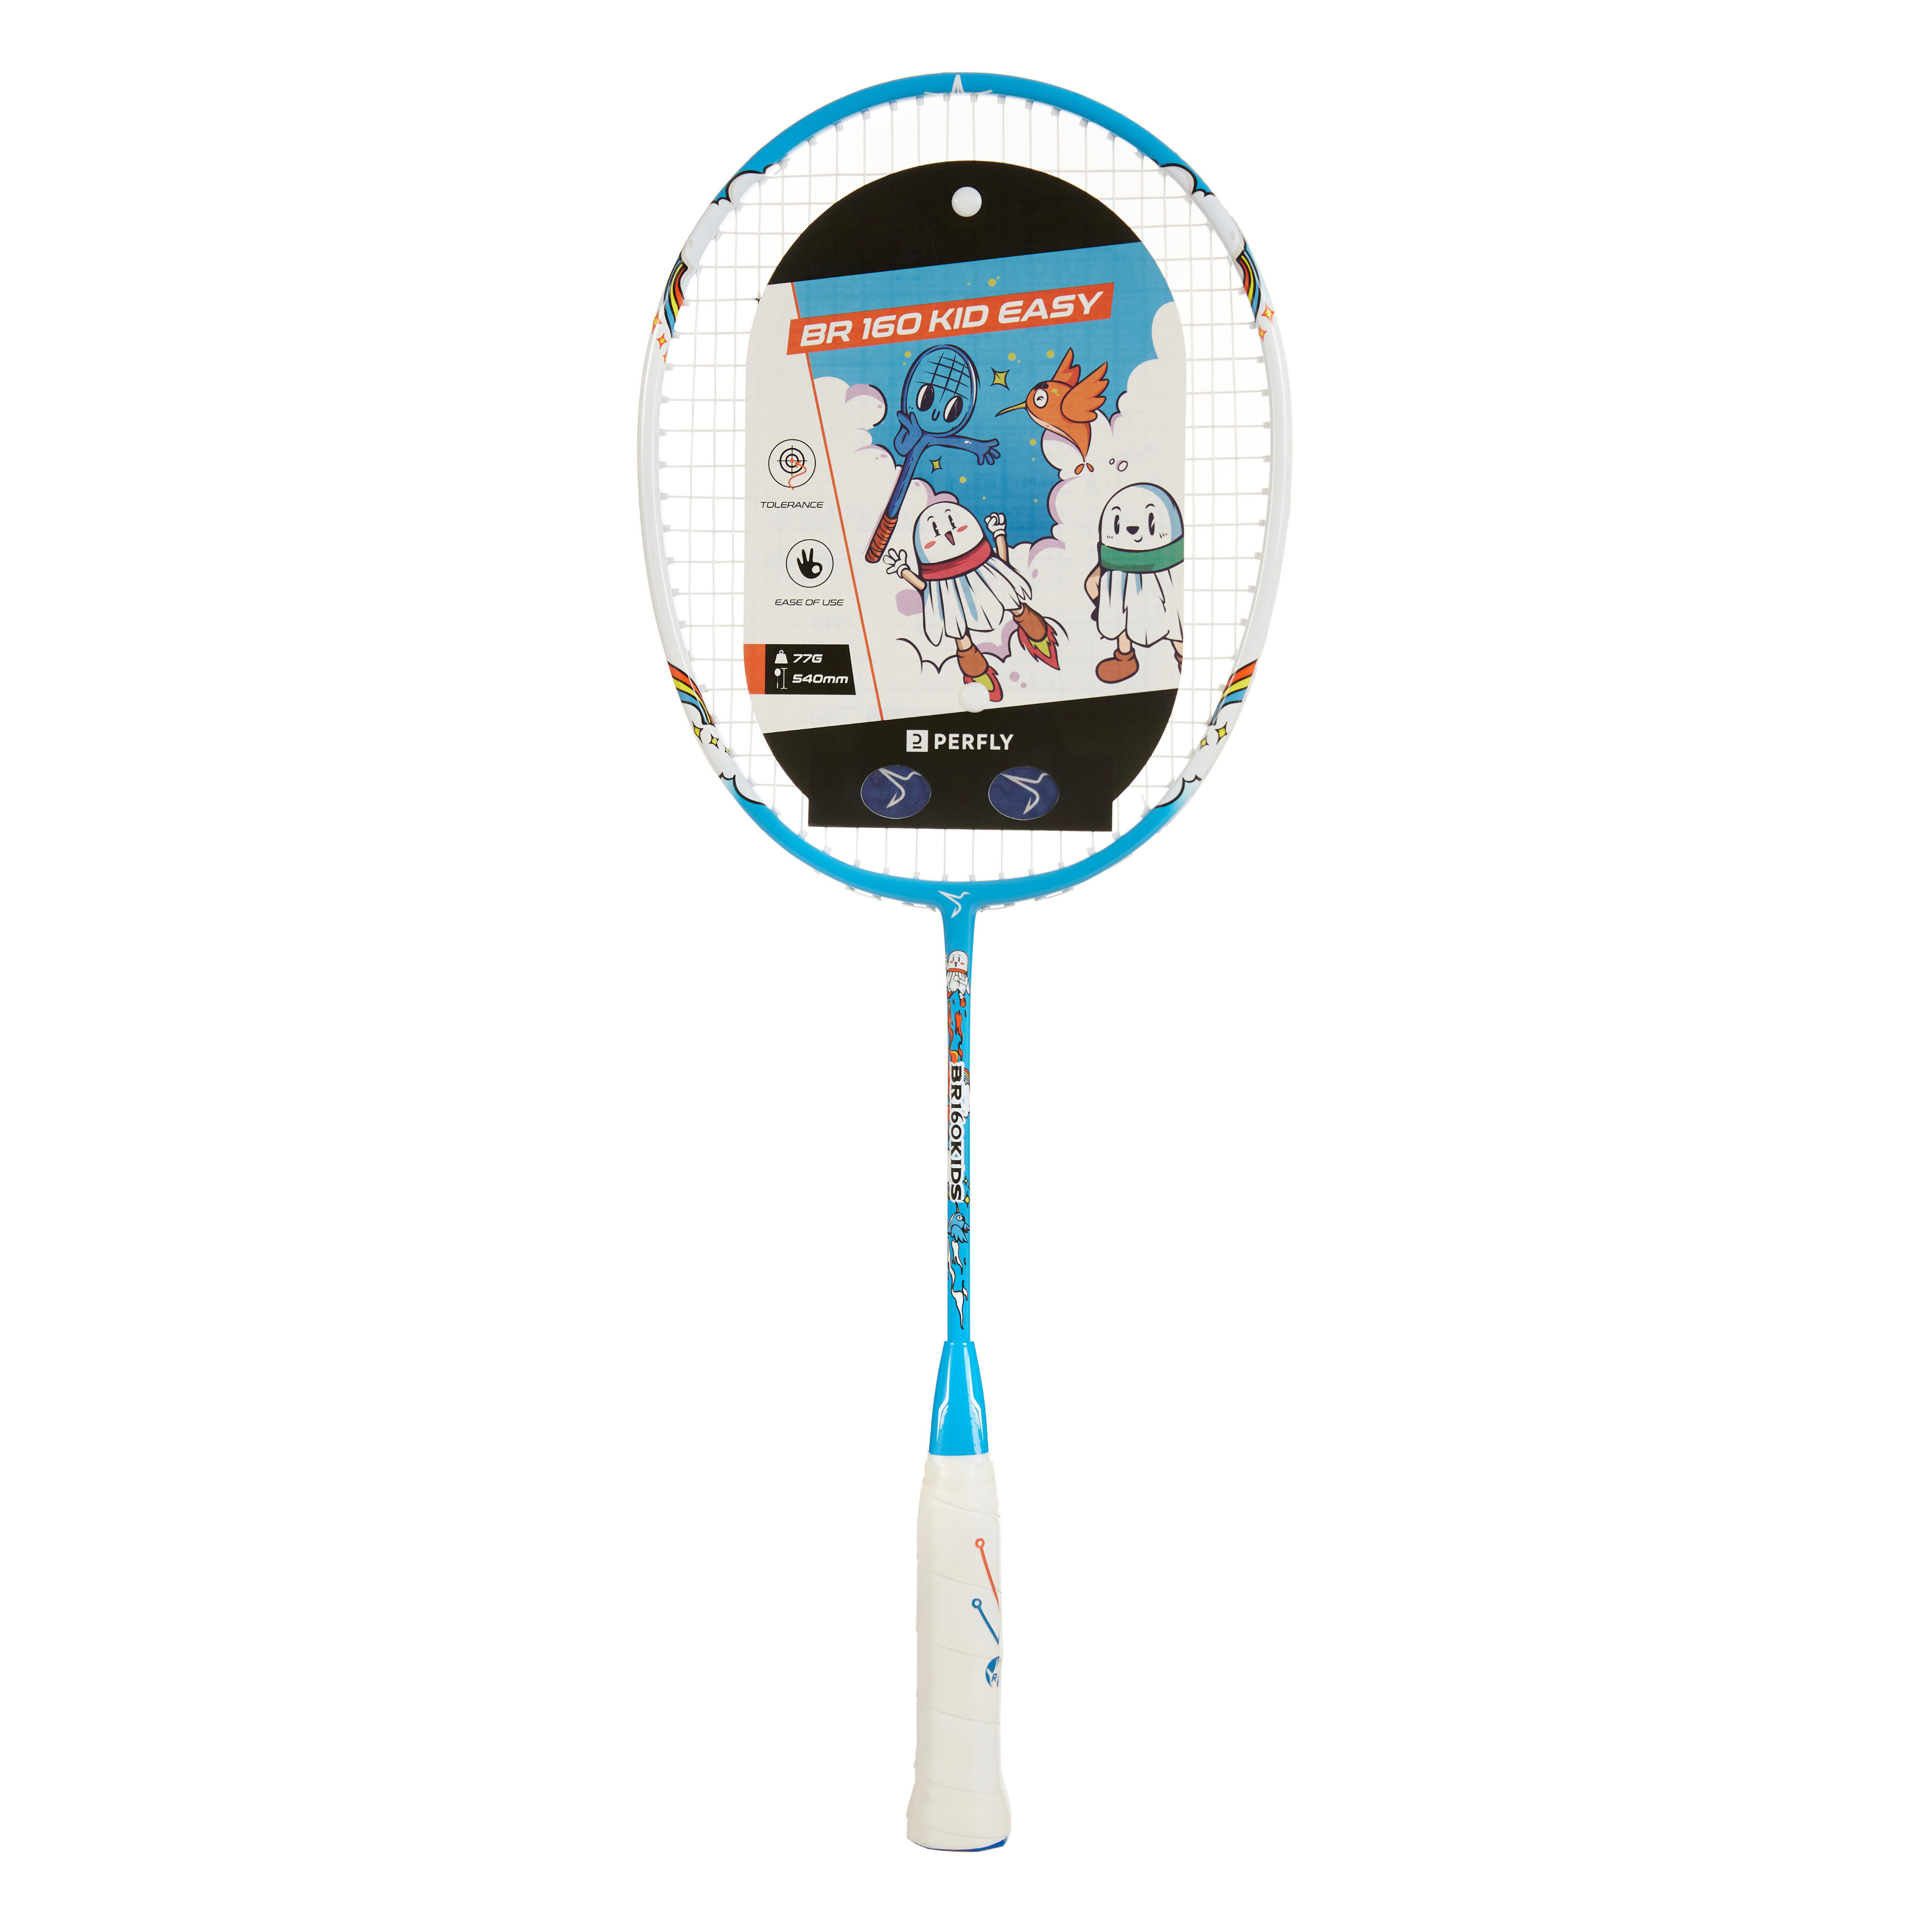 Rachetă Badminton BR160 Kid Easy Albastru Copii PERFLY decathlon.ro